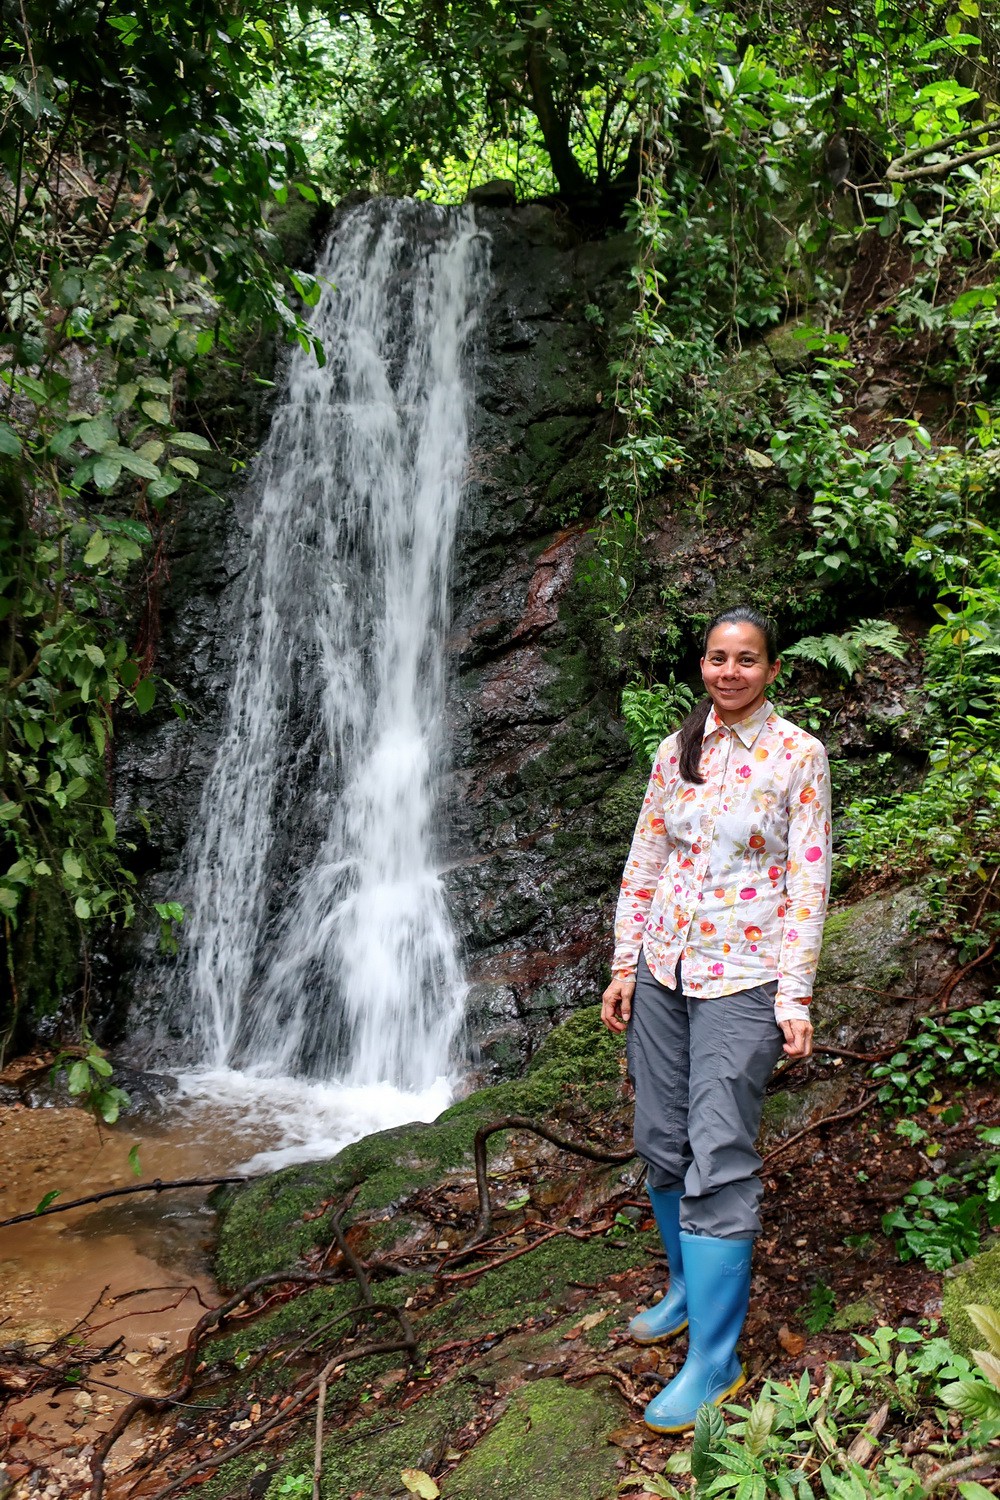 Columbian Lady with waterfall